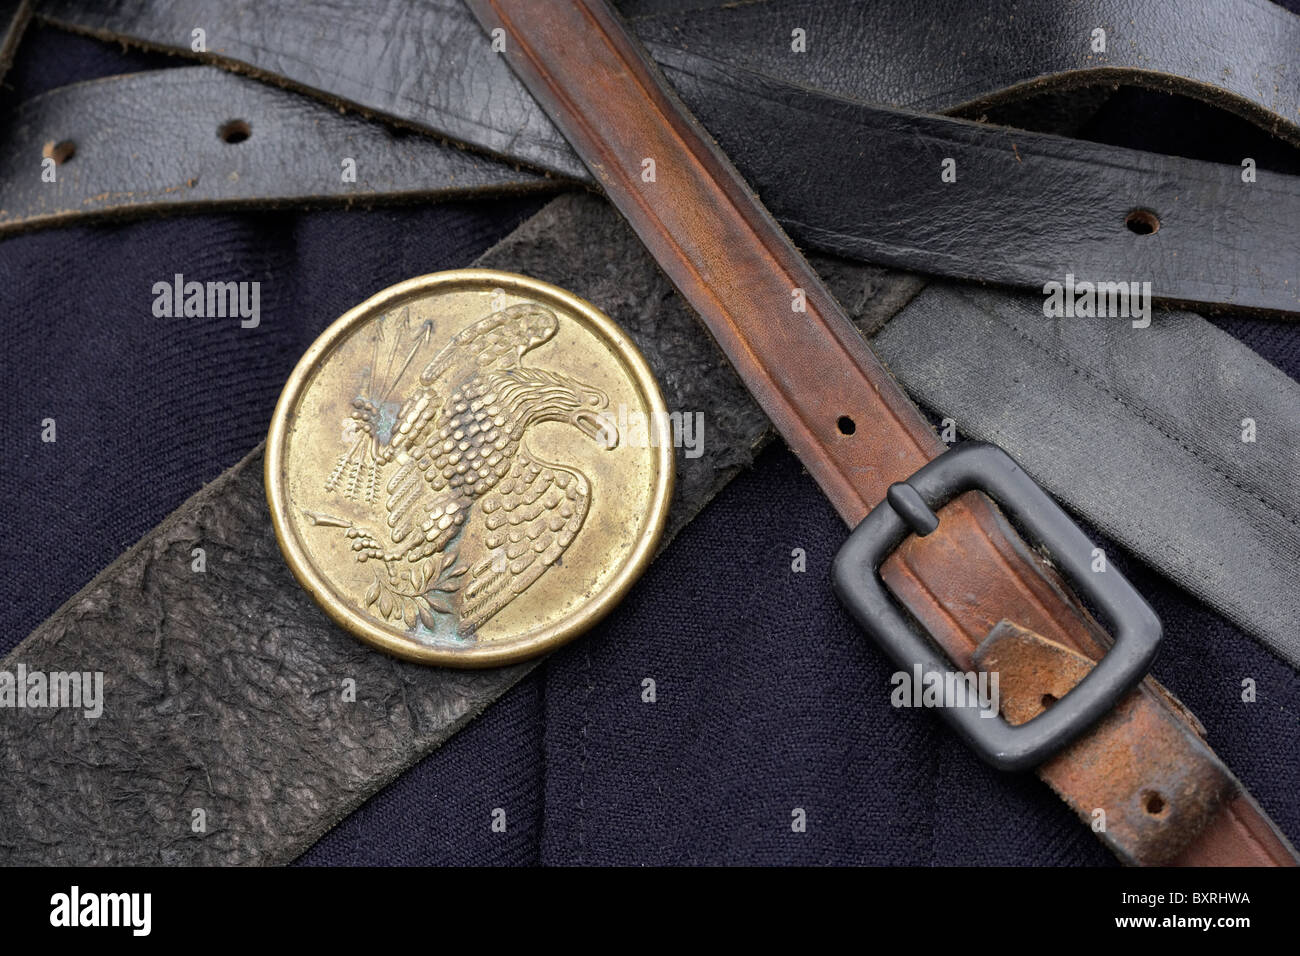 Brass eagle emblem on leather strap, as worn by Union infantrymen